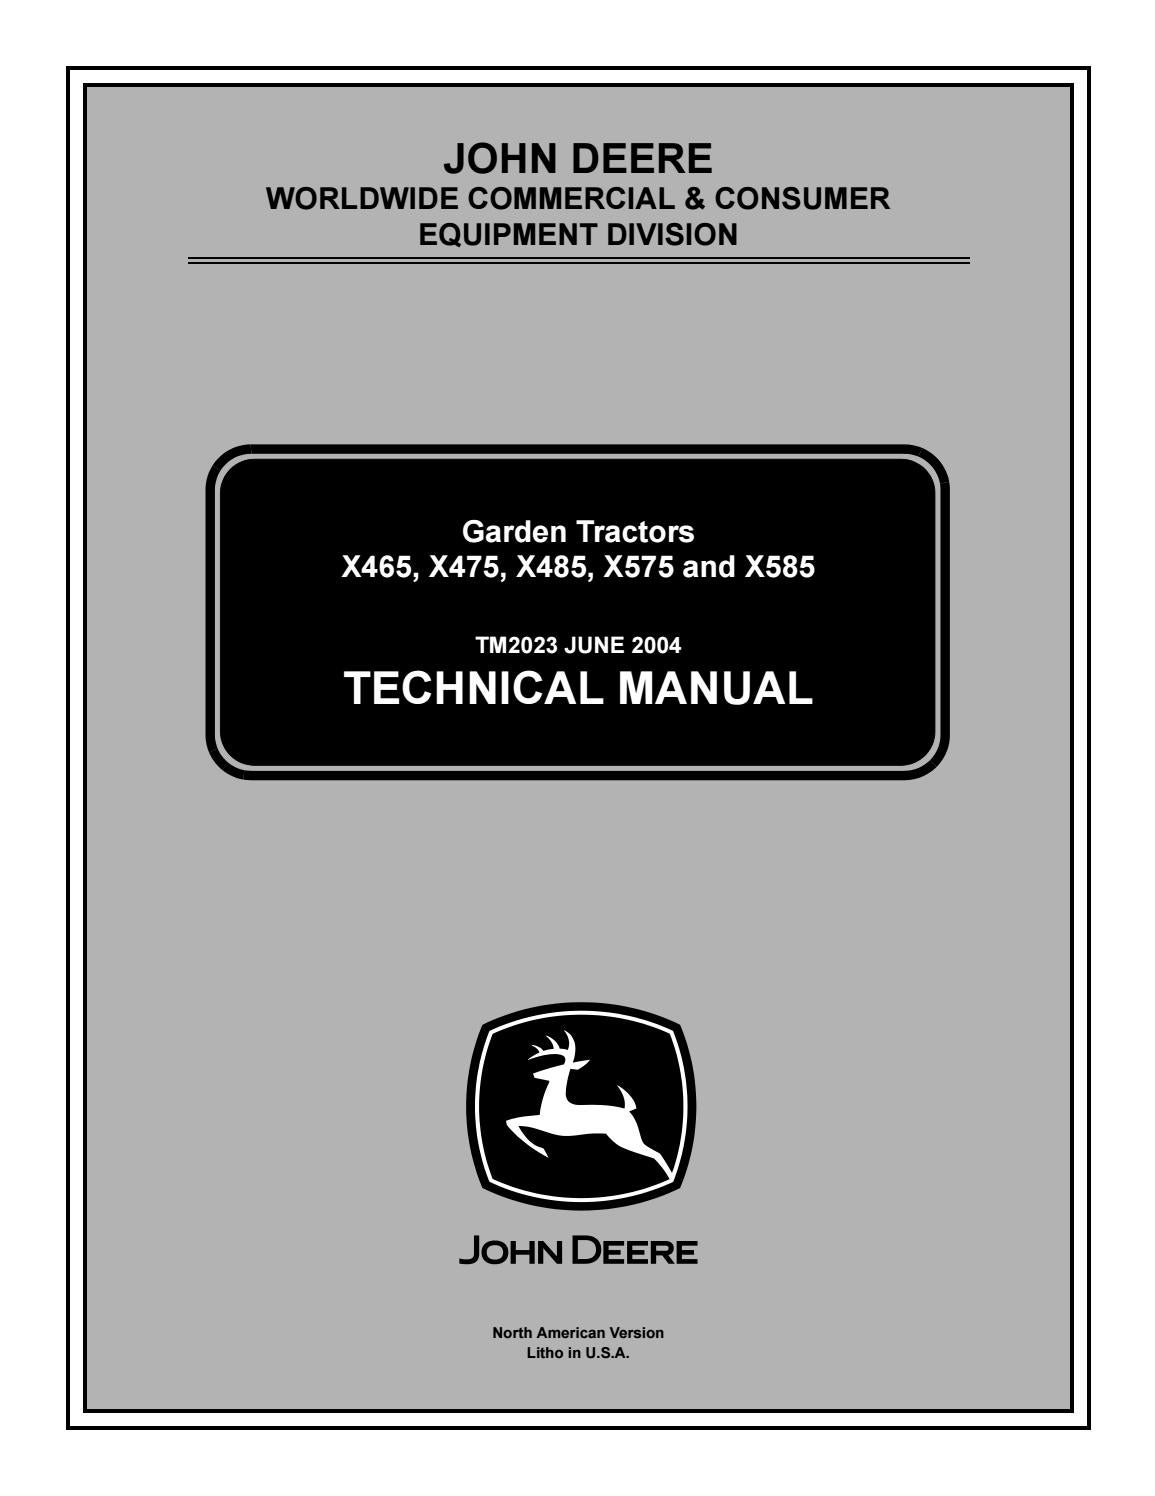 John deere x300 manual pdf